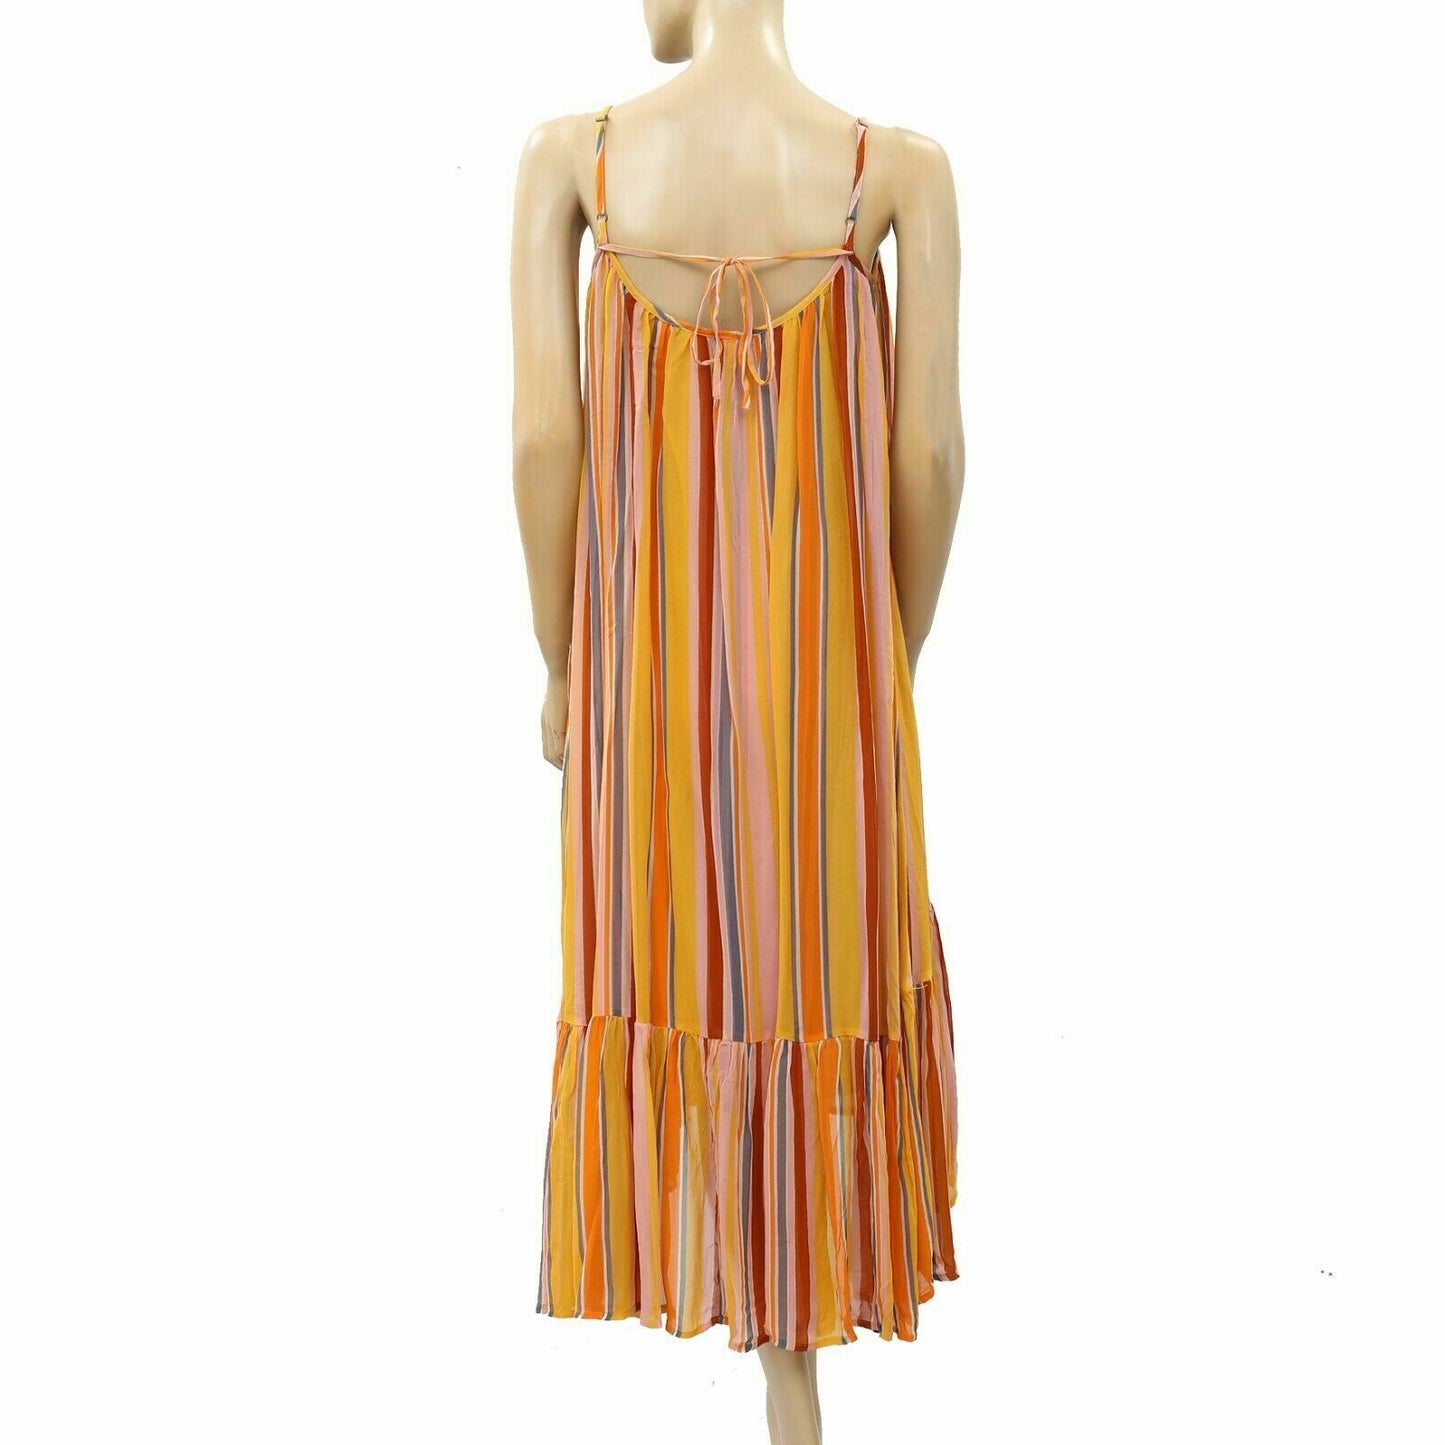 Allsaints Paola Striped Slip Midi Dress